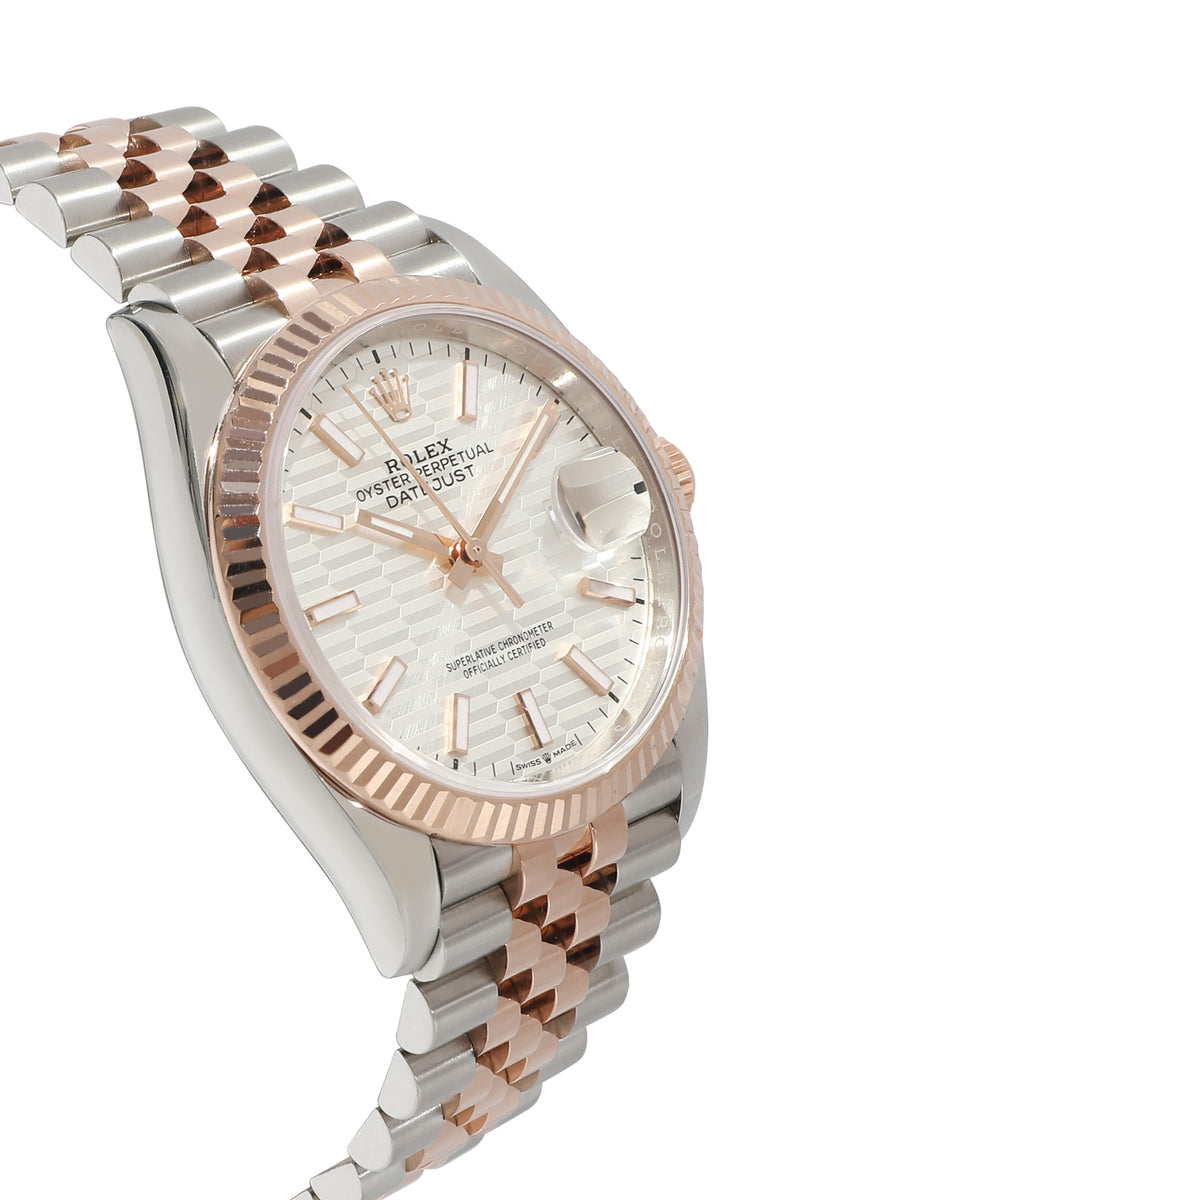 Rolex Datejust 126231 Men's Watch in 18kt Stainless Steel/Rose Gold